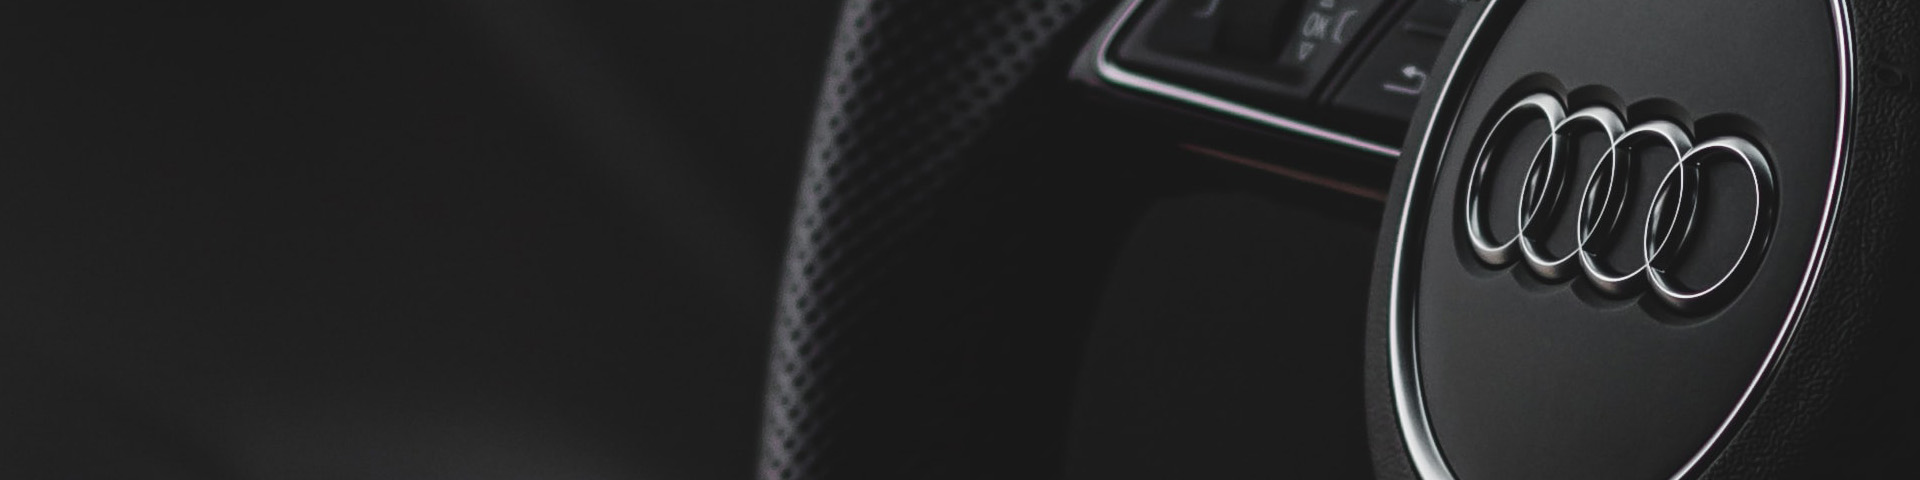 Audi Q2 Backdrop